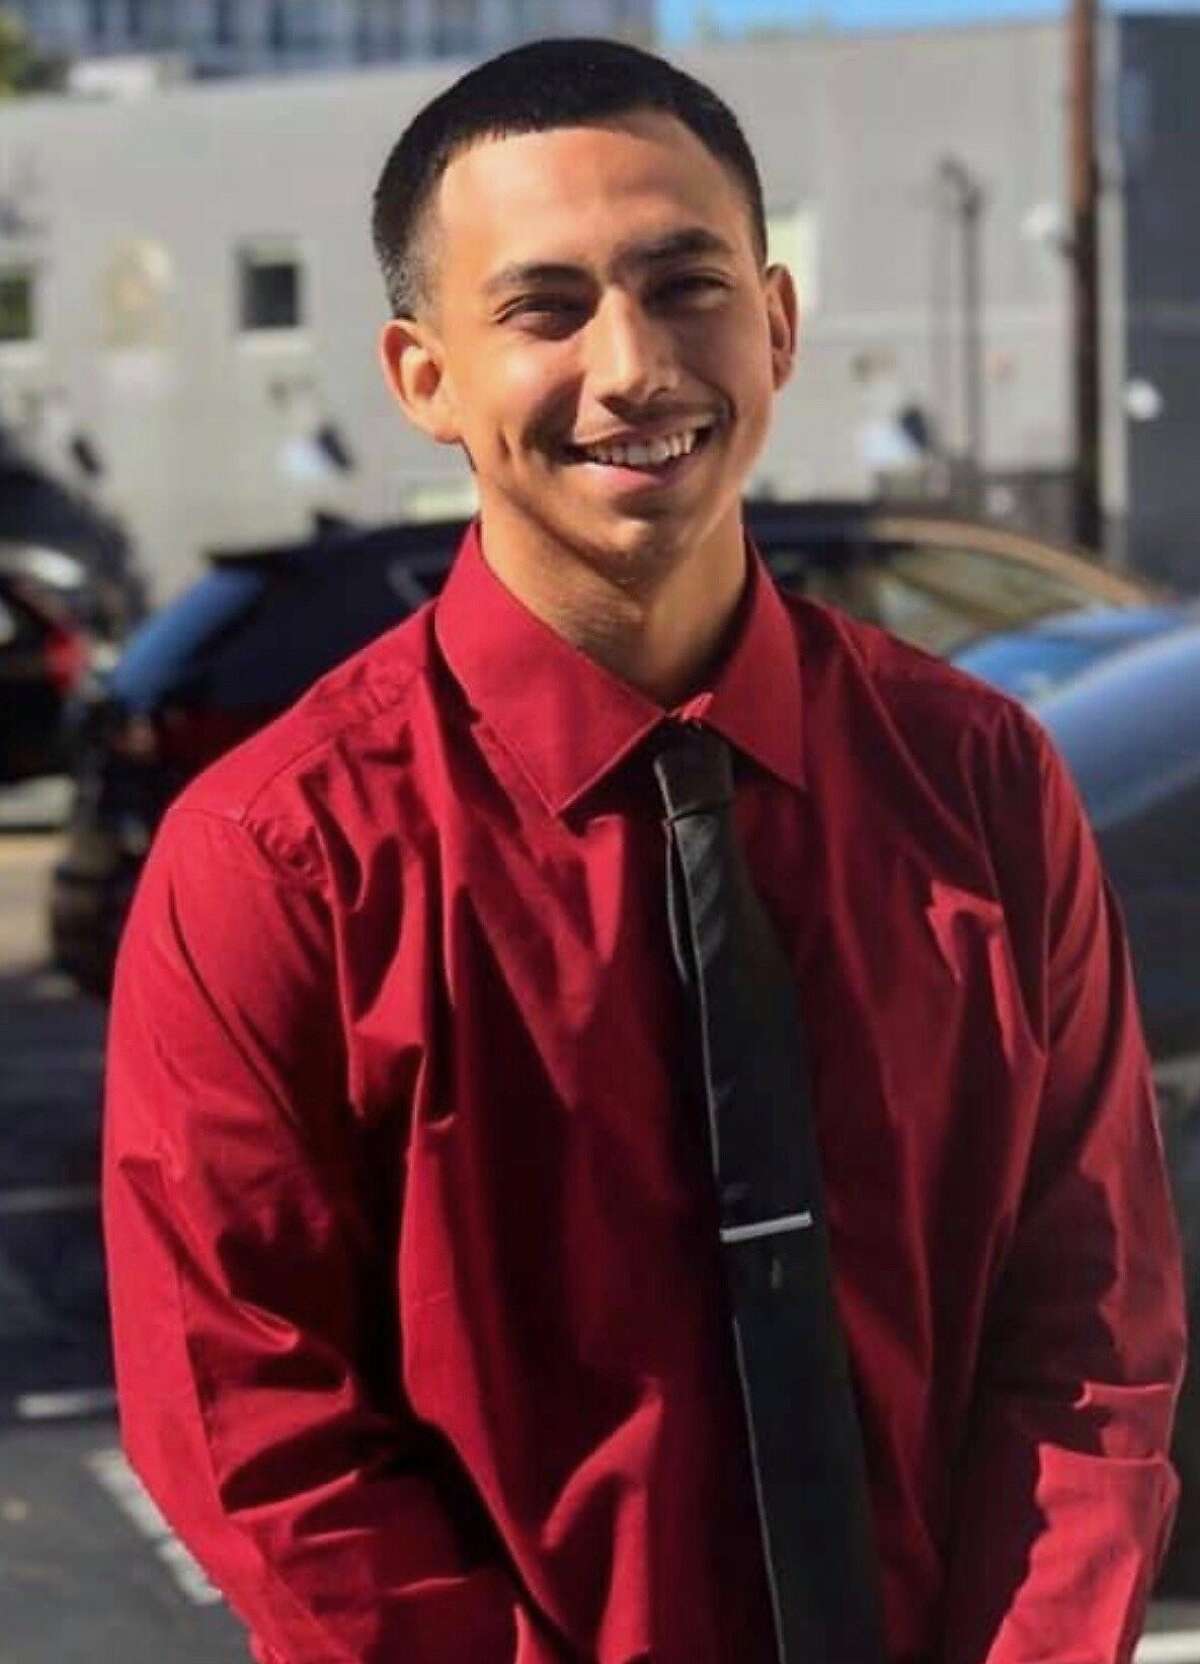 Luis Qui�onez, 19, was fatally shot Sunday in San Francisco’s Crocker-Amazon neighborhood.